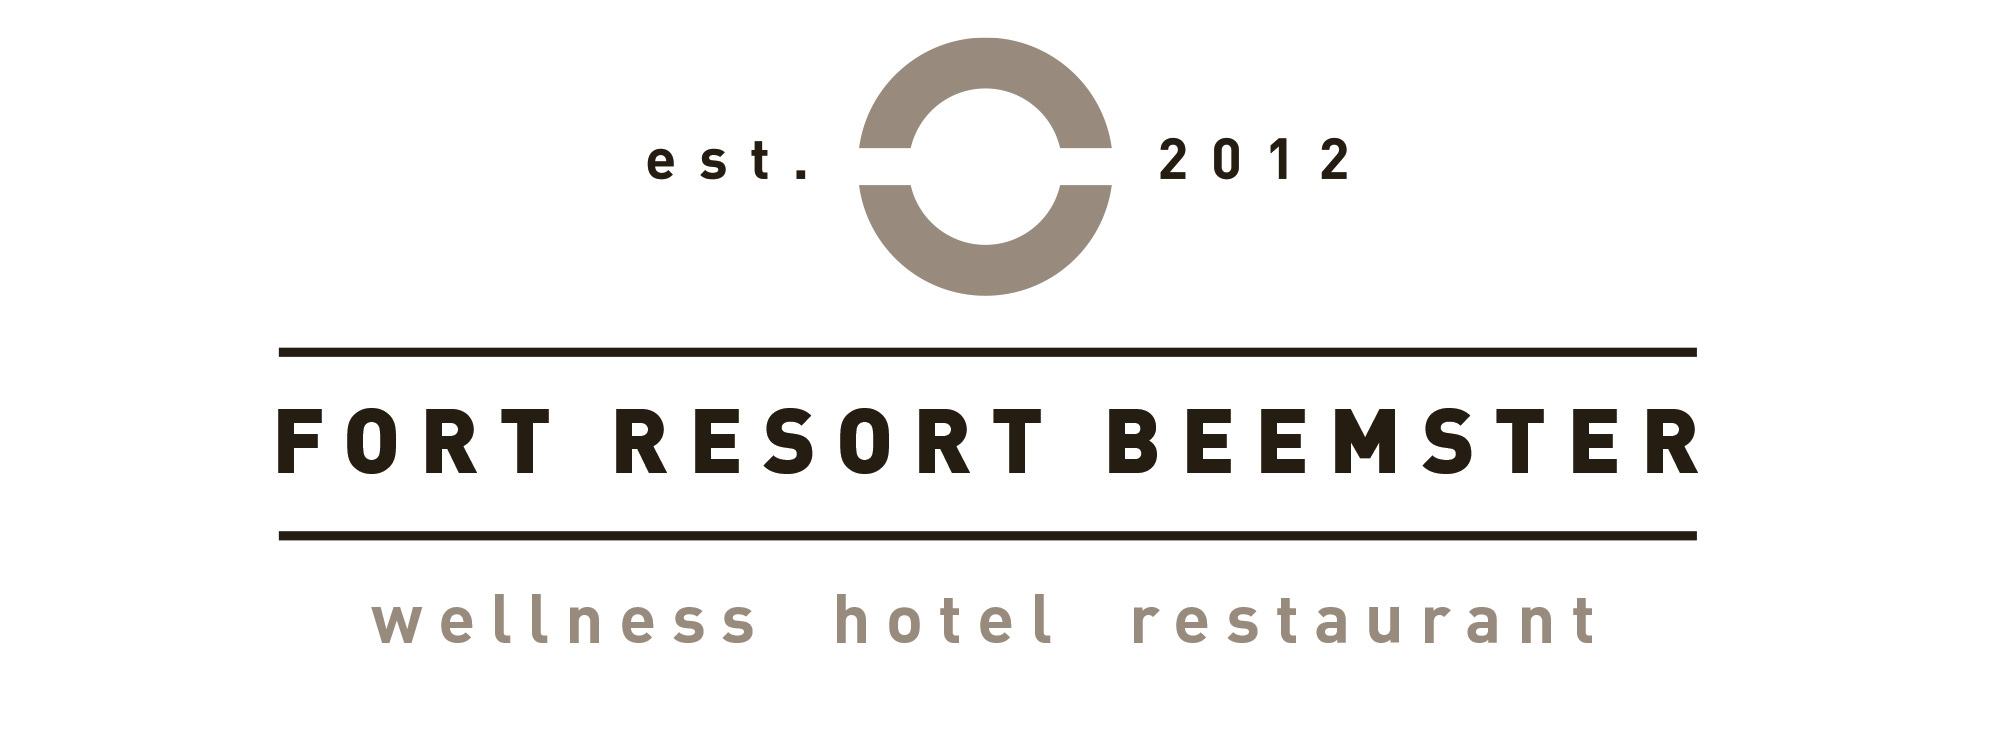 Fort Resort Beemster logo